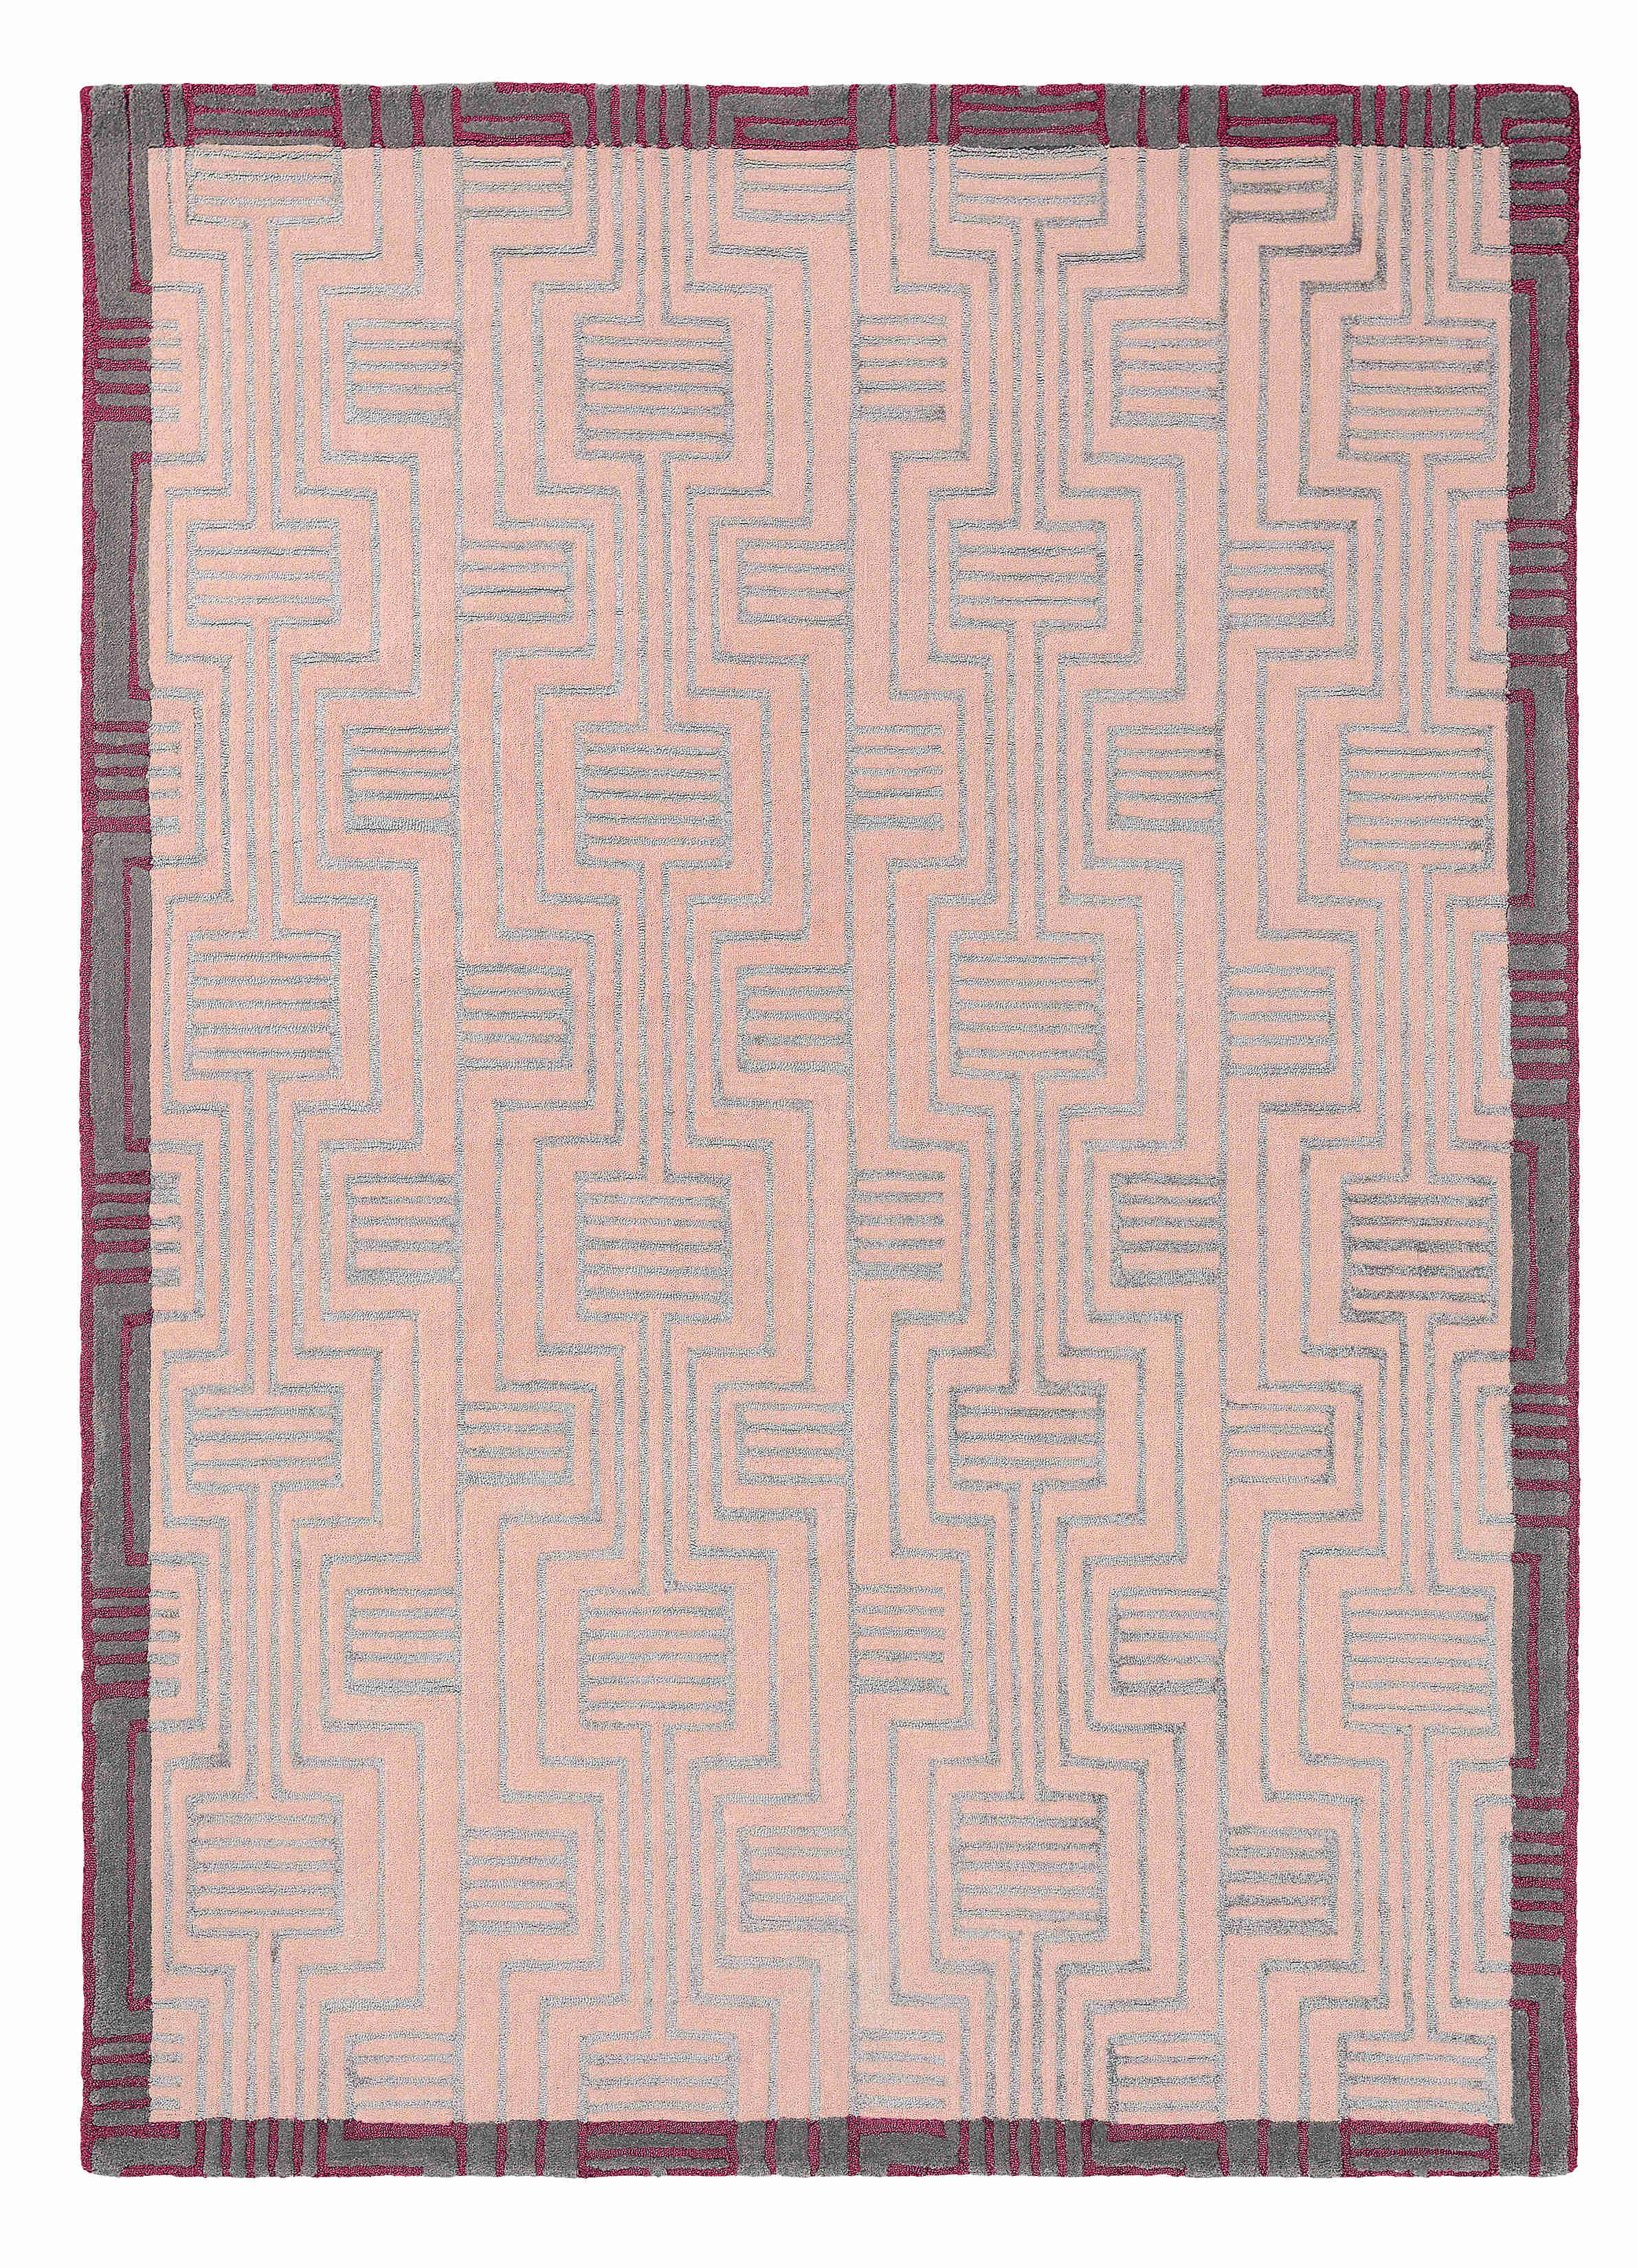 Rectangular pink rug with burgundy border and grey art deco pattern